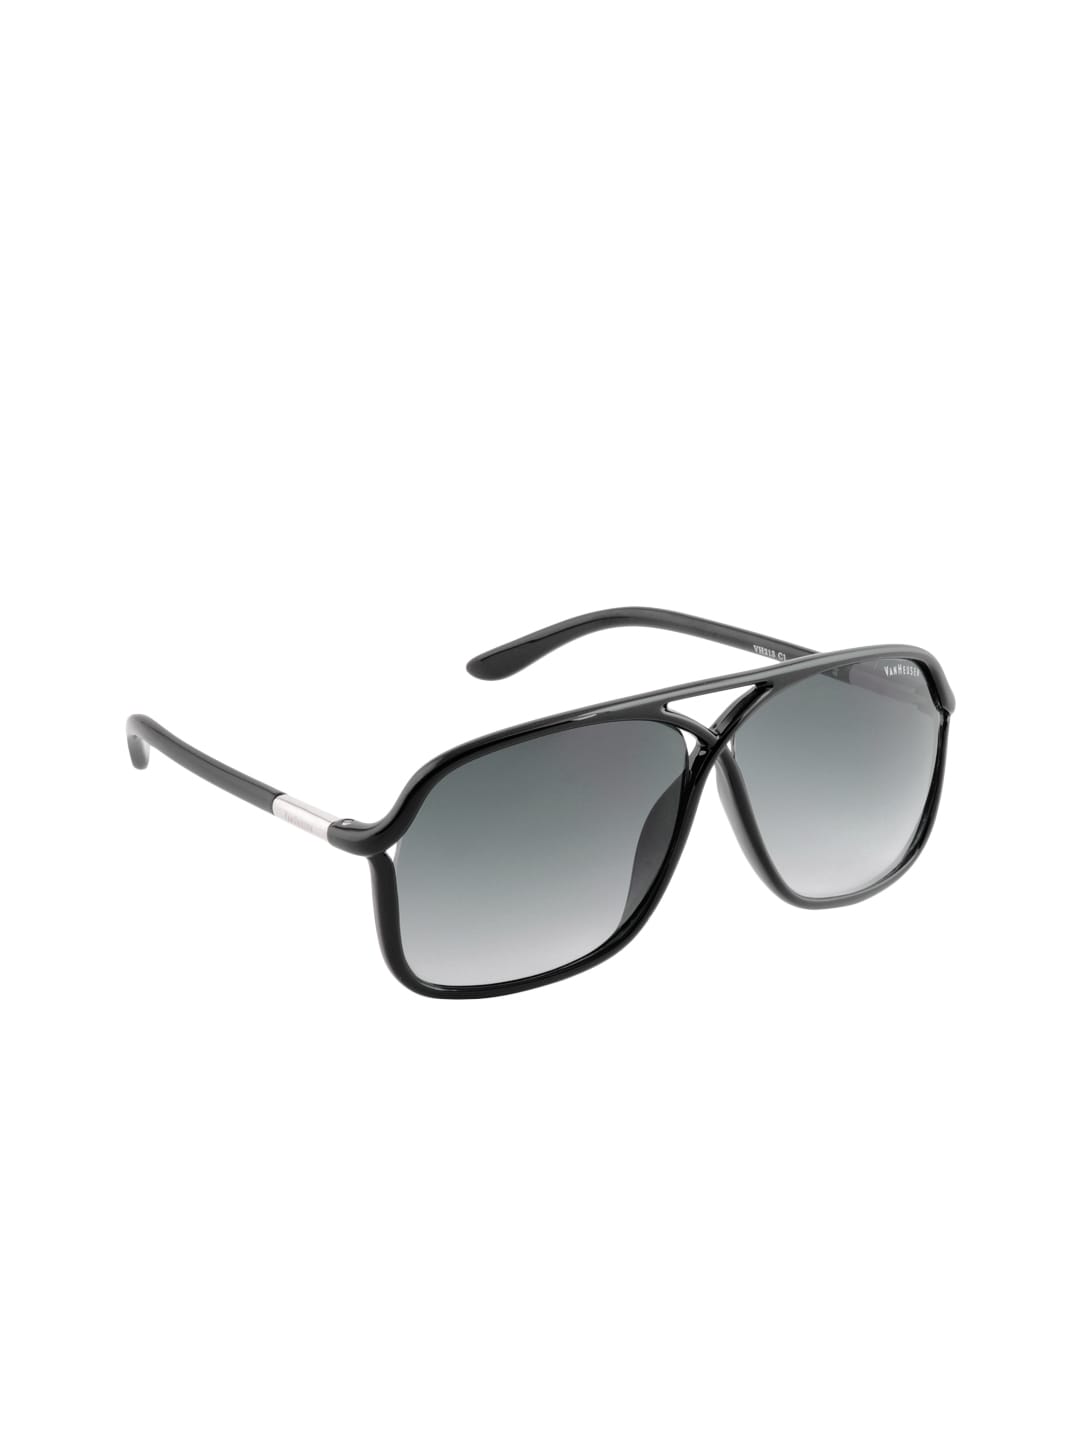 Van Heusen Unisex Sunglasses VH213-C1